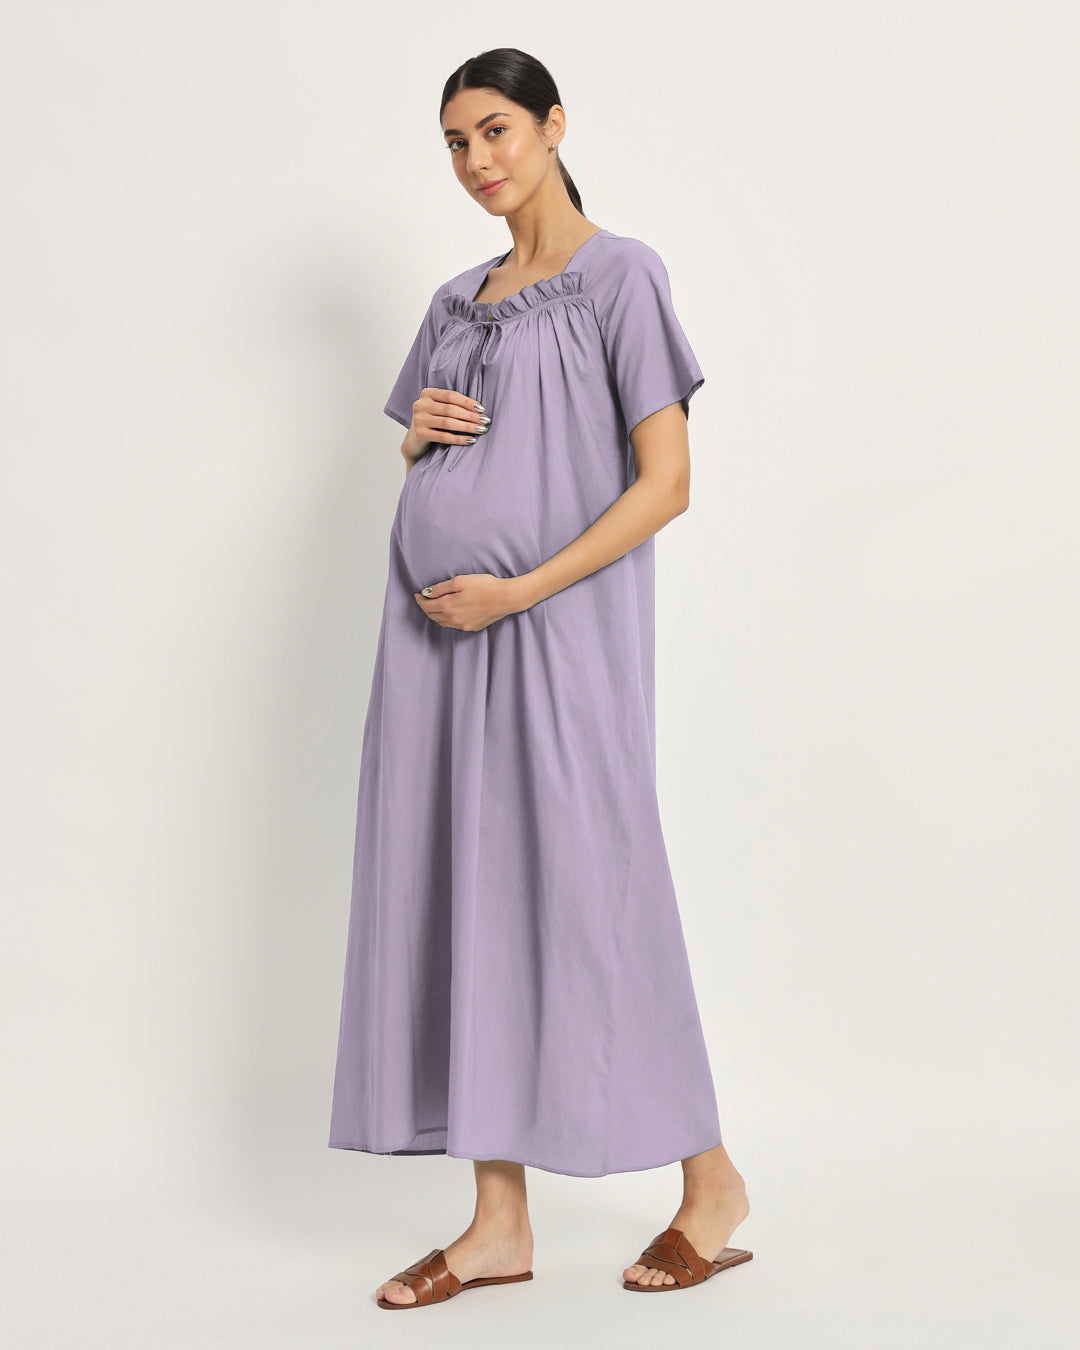 Combo: Iris Pink & Lilac Nurture N' Shine Maternity & Nursing Dress